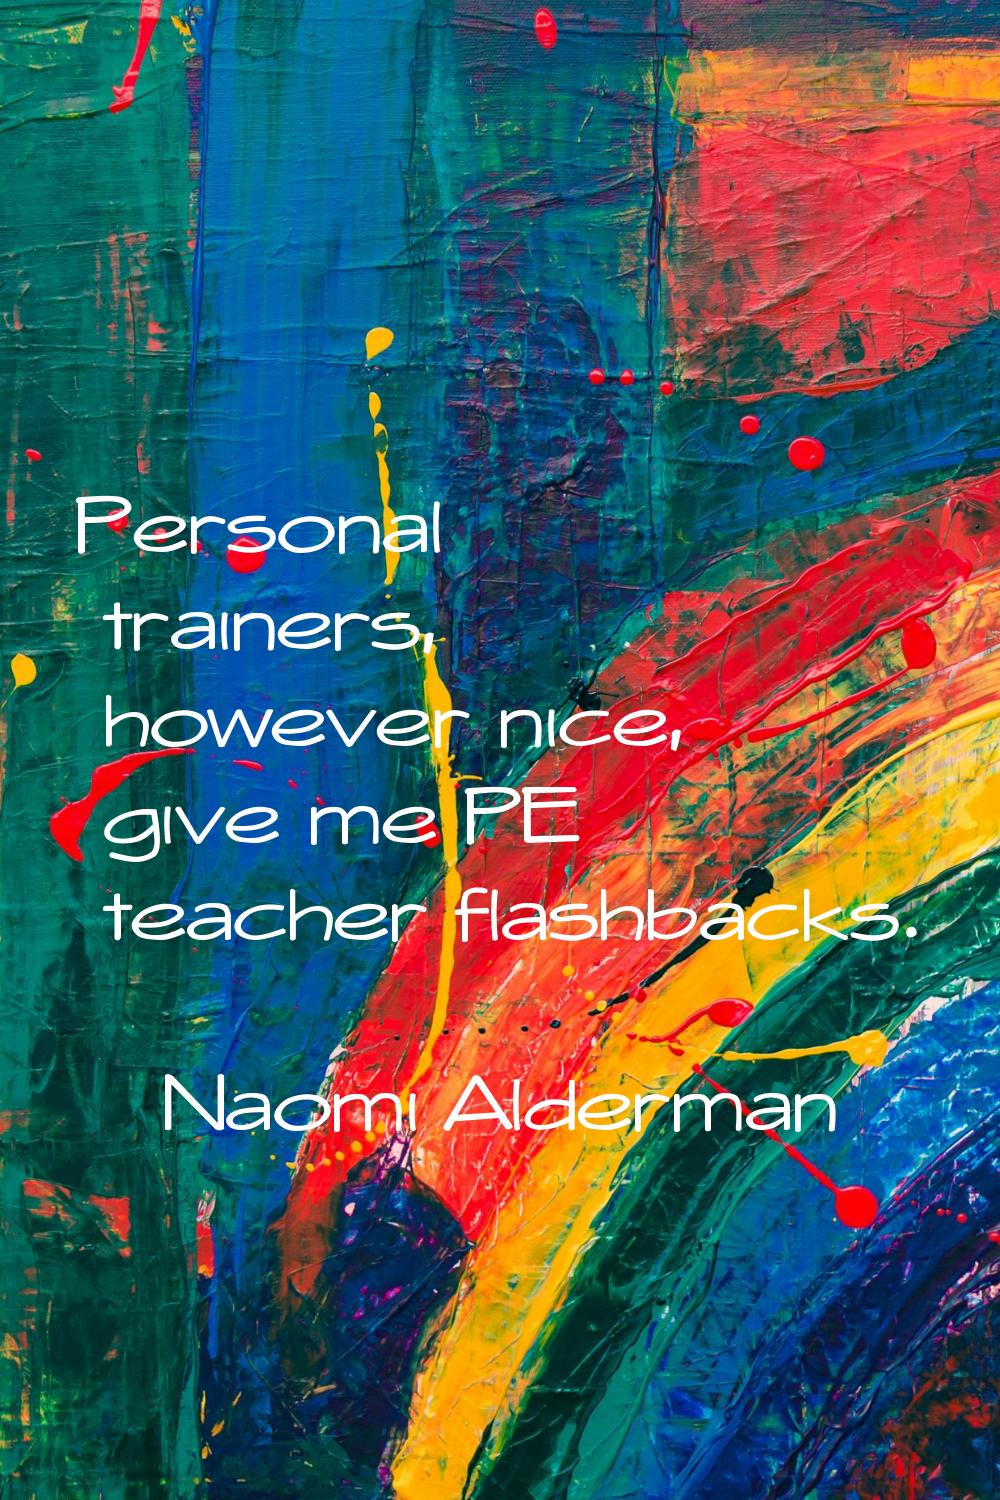 Personal trainers, however nice, give me PE teacher flashbacks.